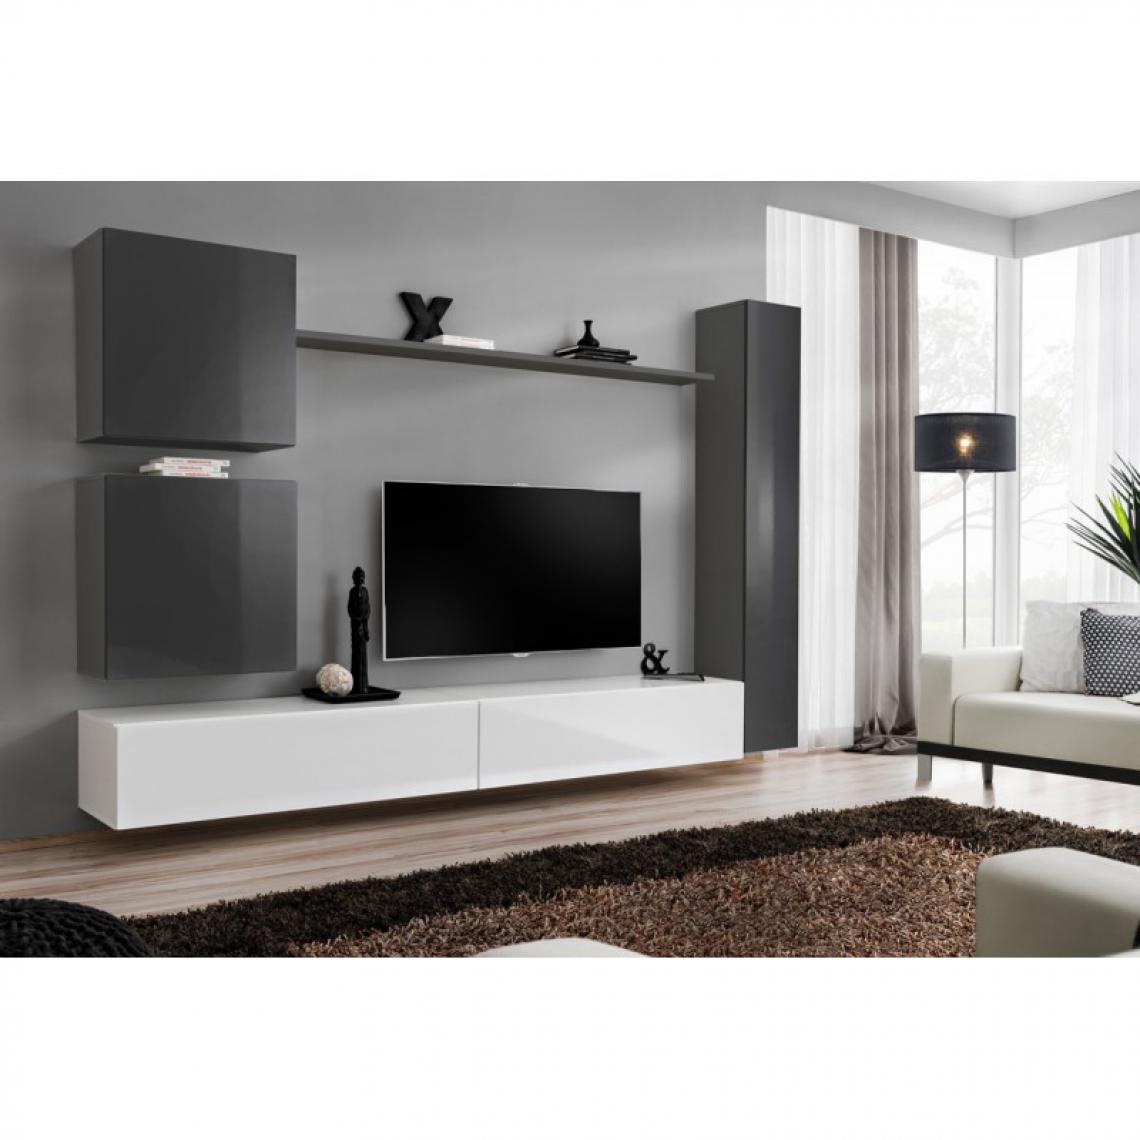 Ac-Deco - Meuble TV Mural Design Switch VIII 280cm Gris & Blanc - Meubles TV, Hi-Fi